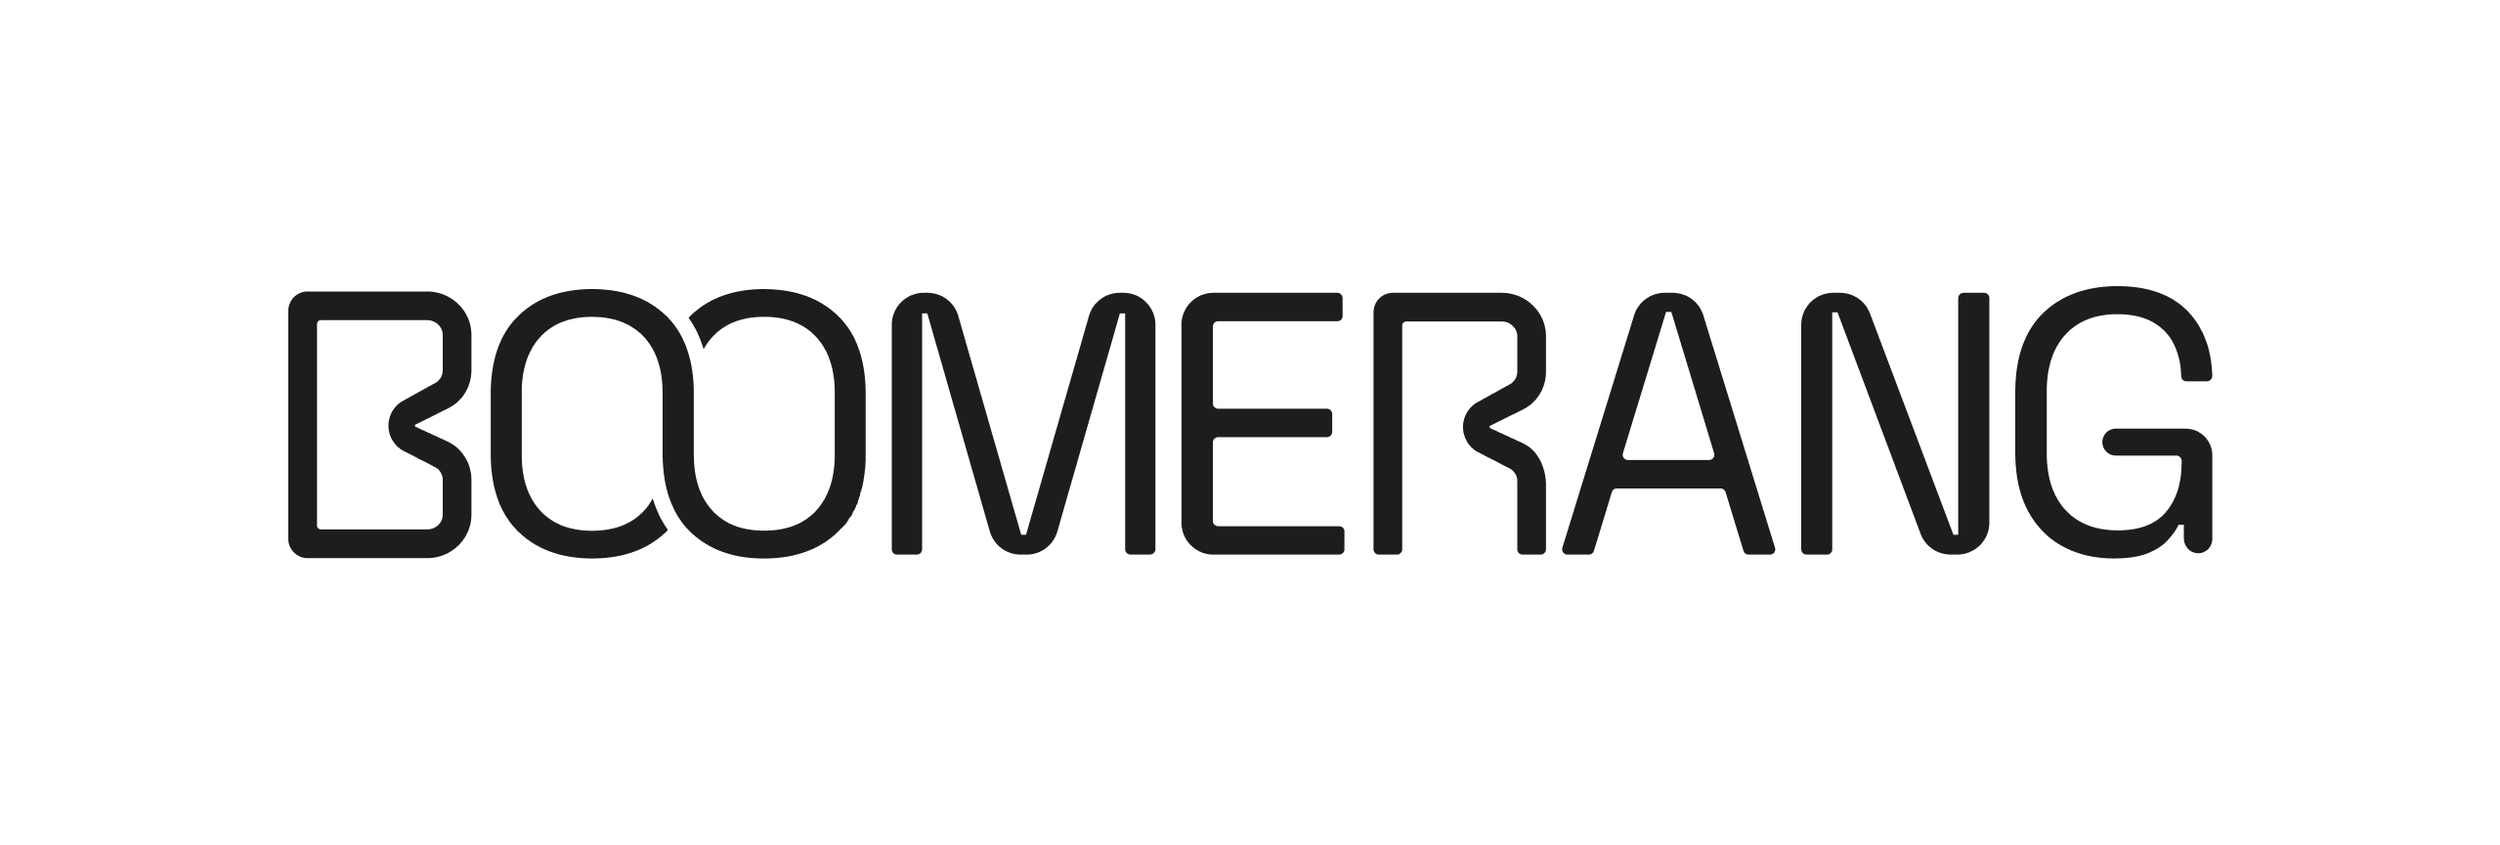 boomerang-logo-black.png